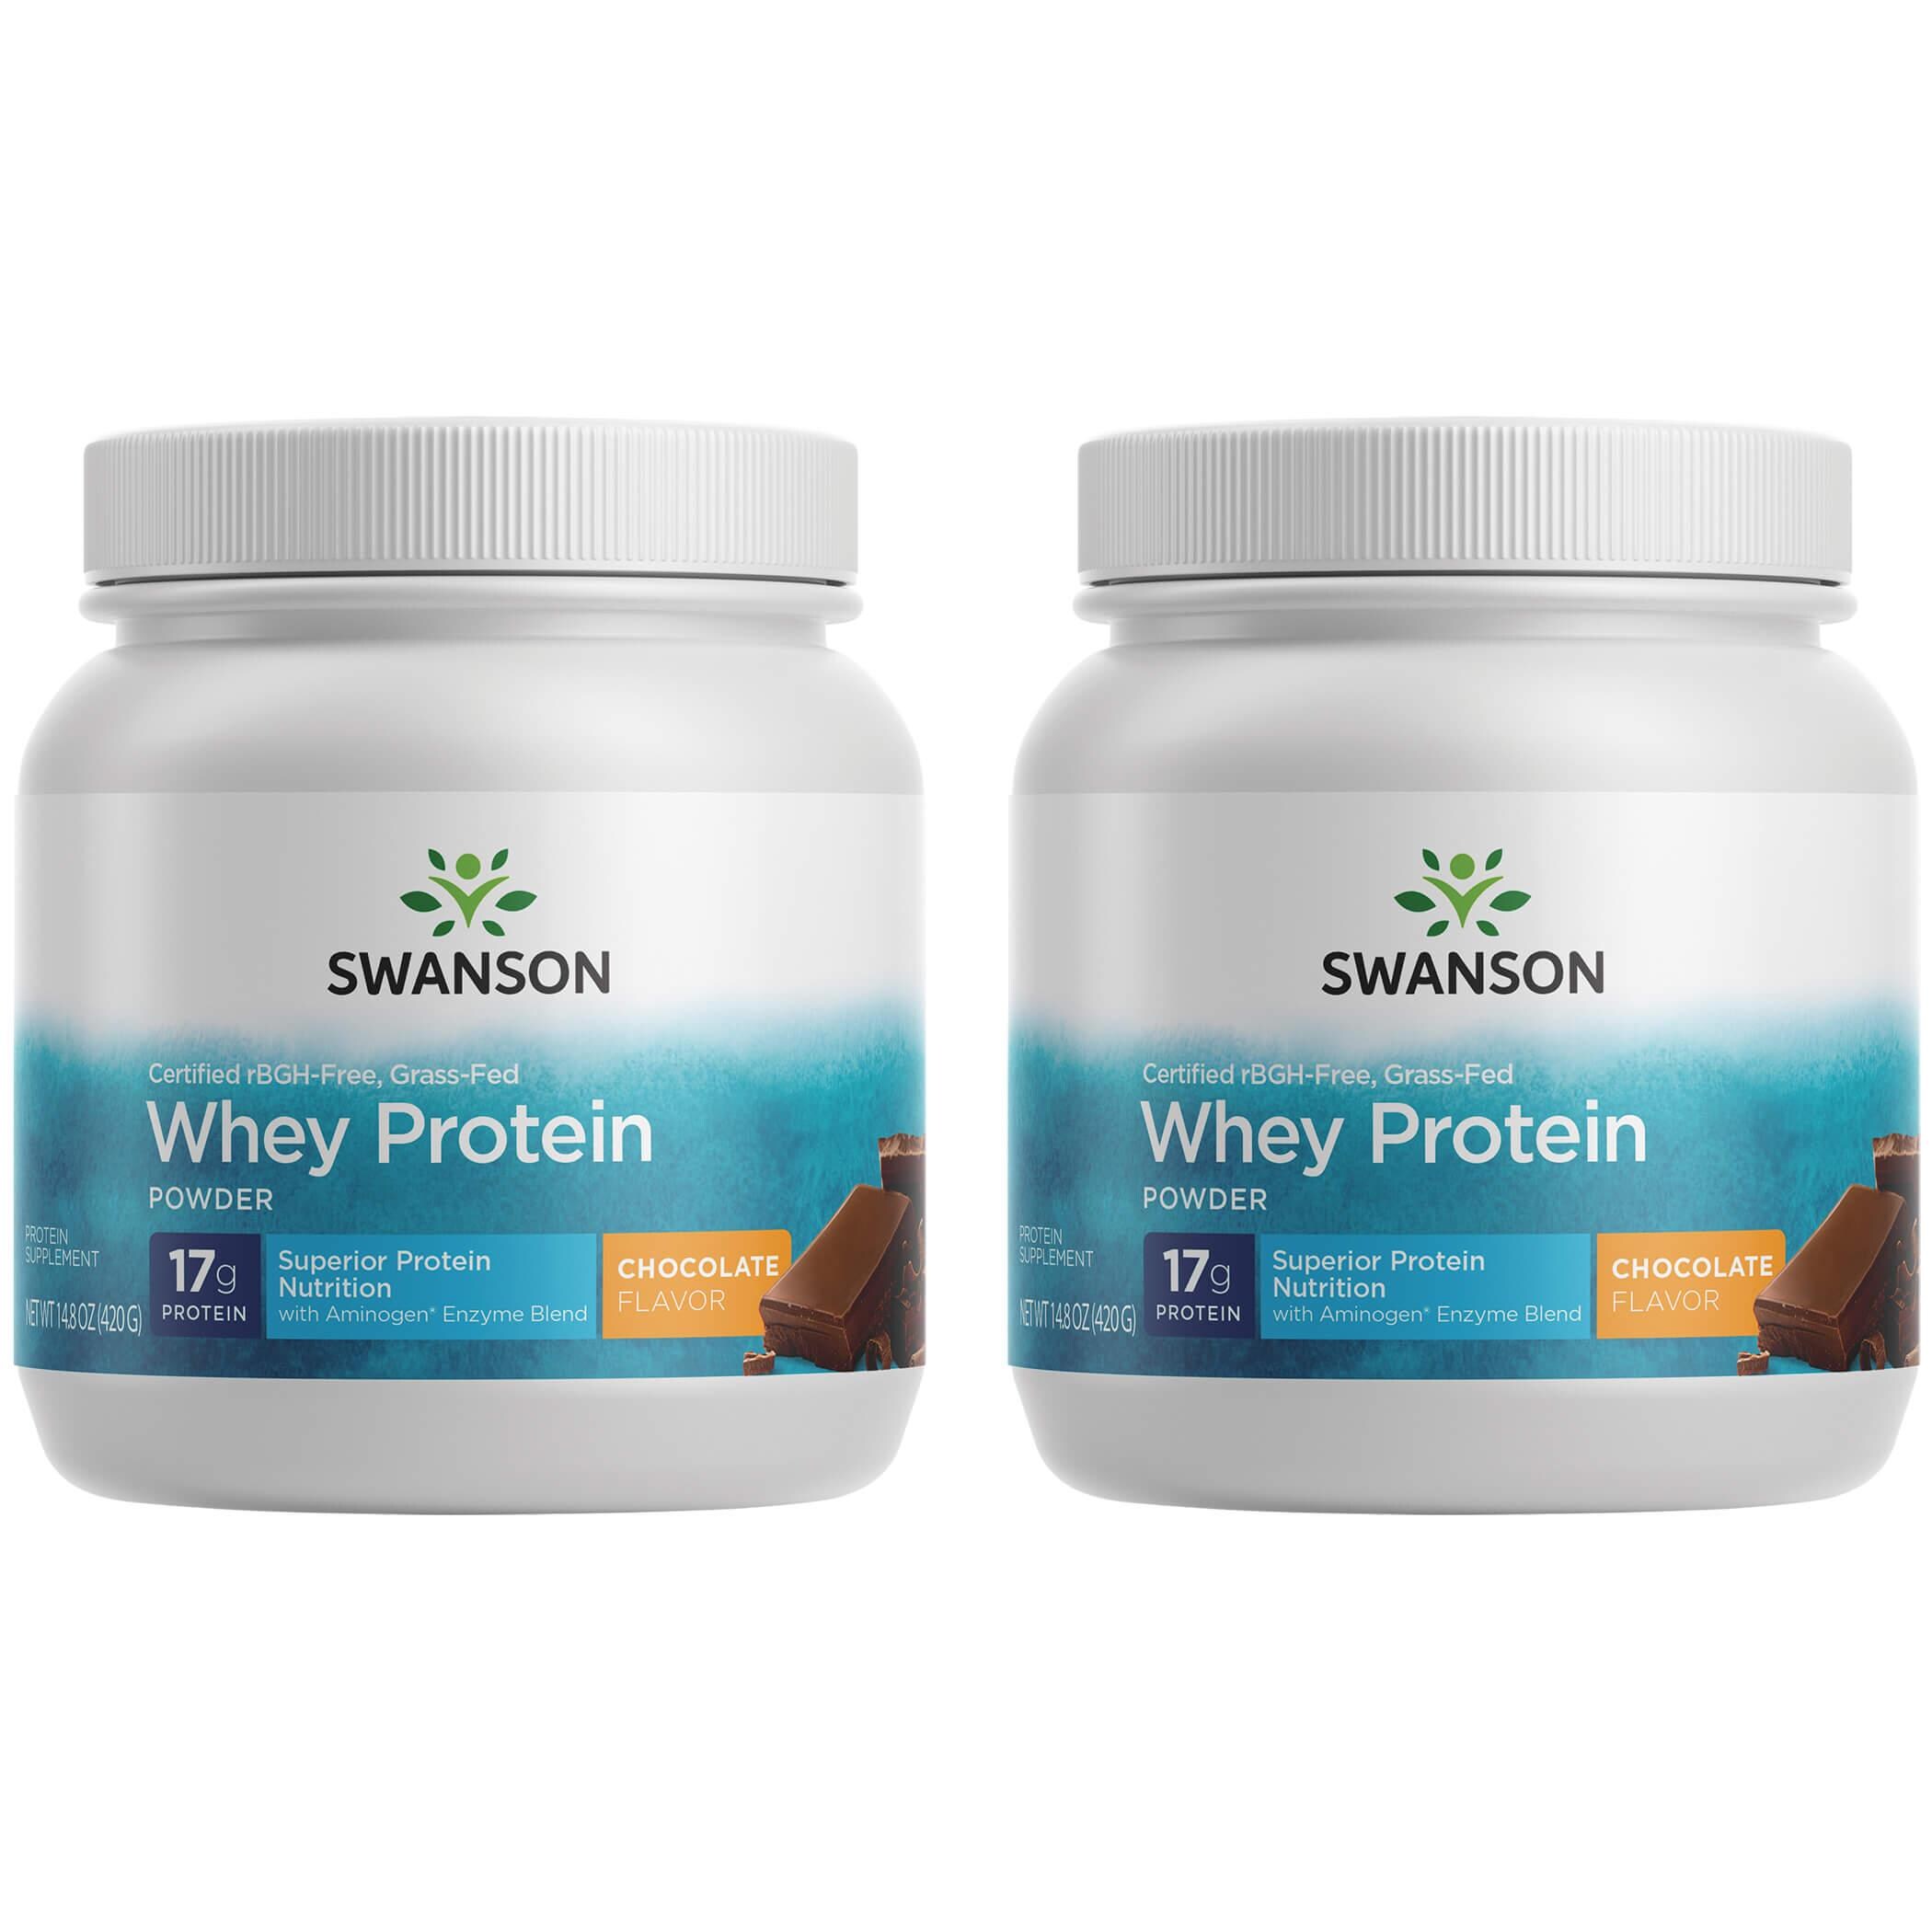 Swanson Ultra Certified rbgh-Free Grass-Fed Whey Protein Powder - Chocolate 2 Pack 14.8 oz Powder